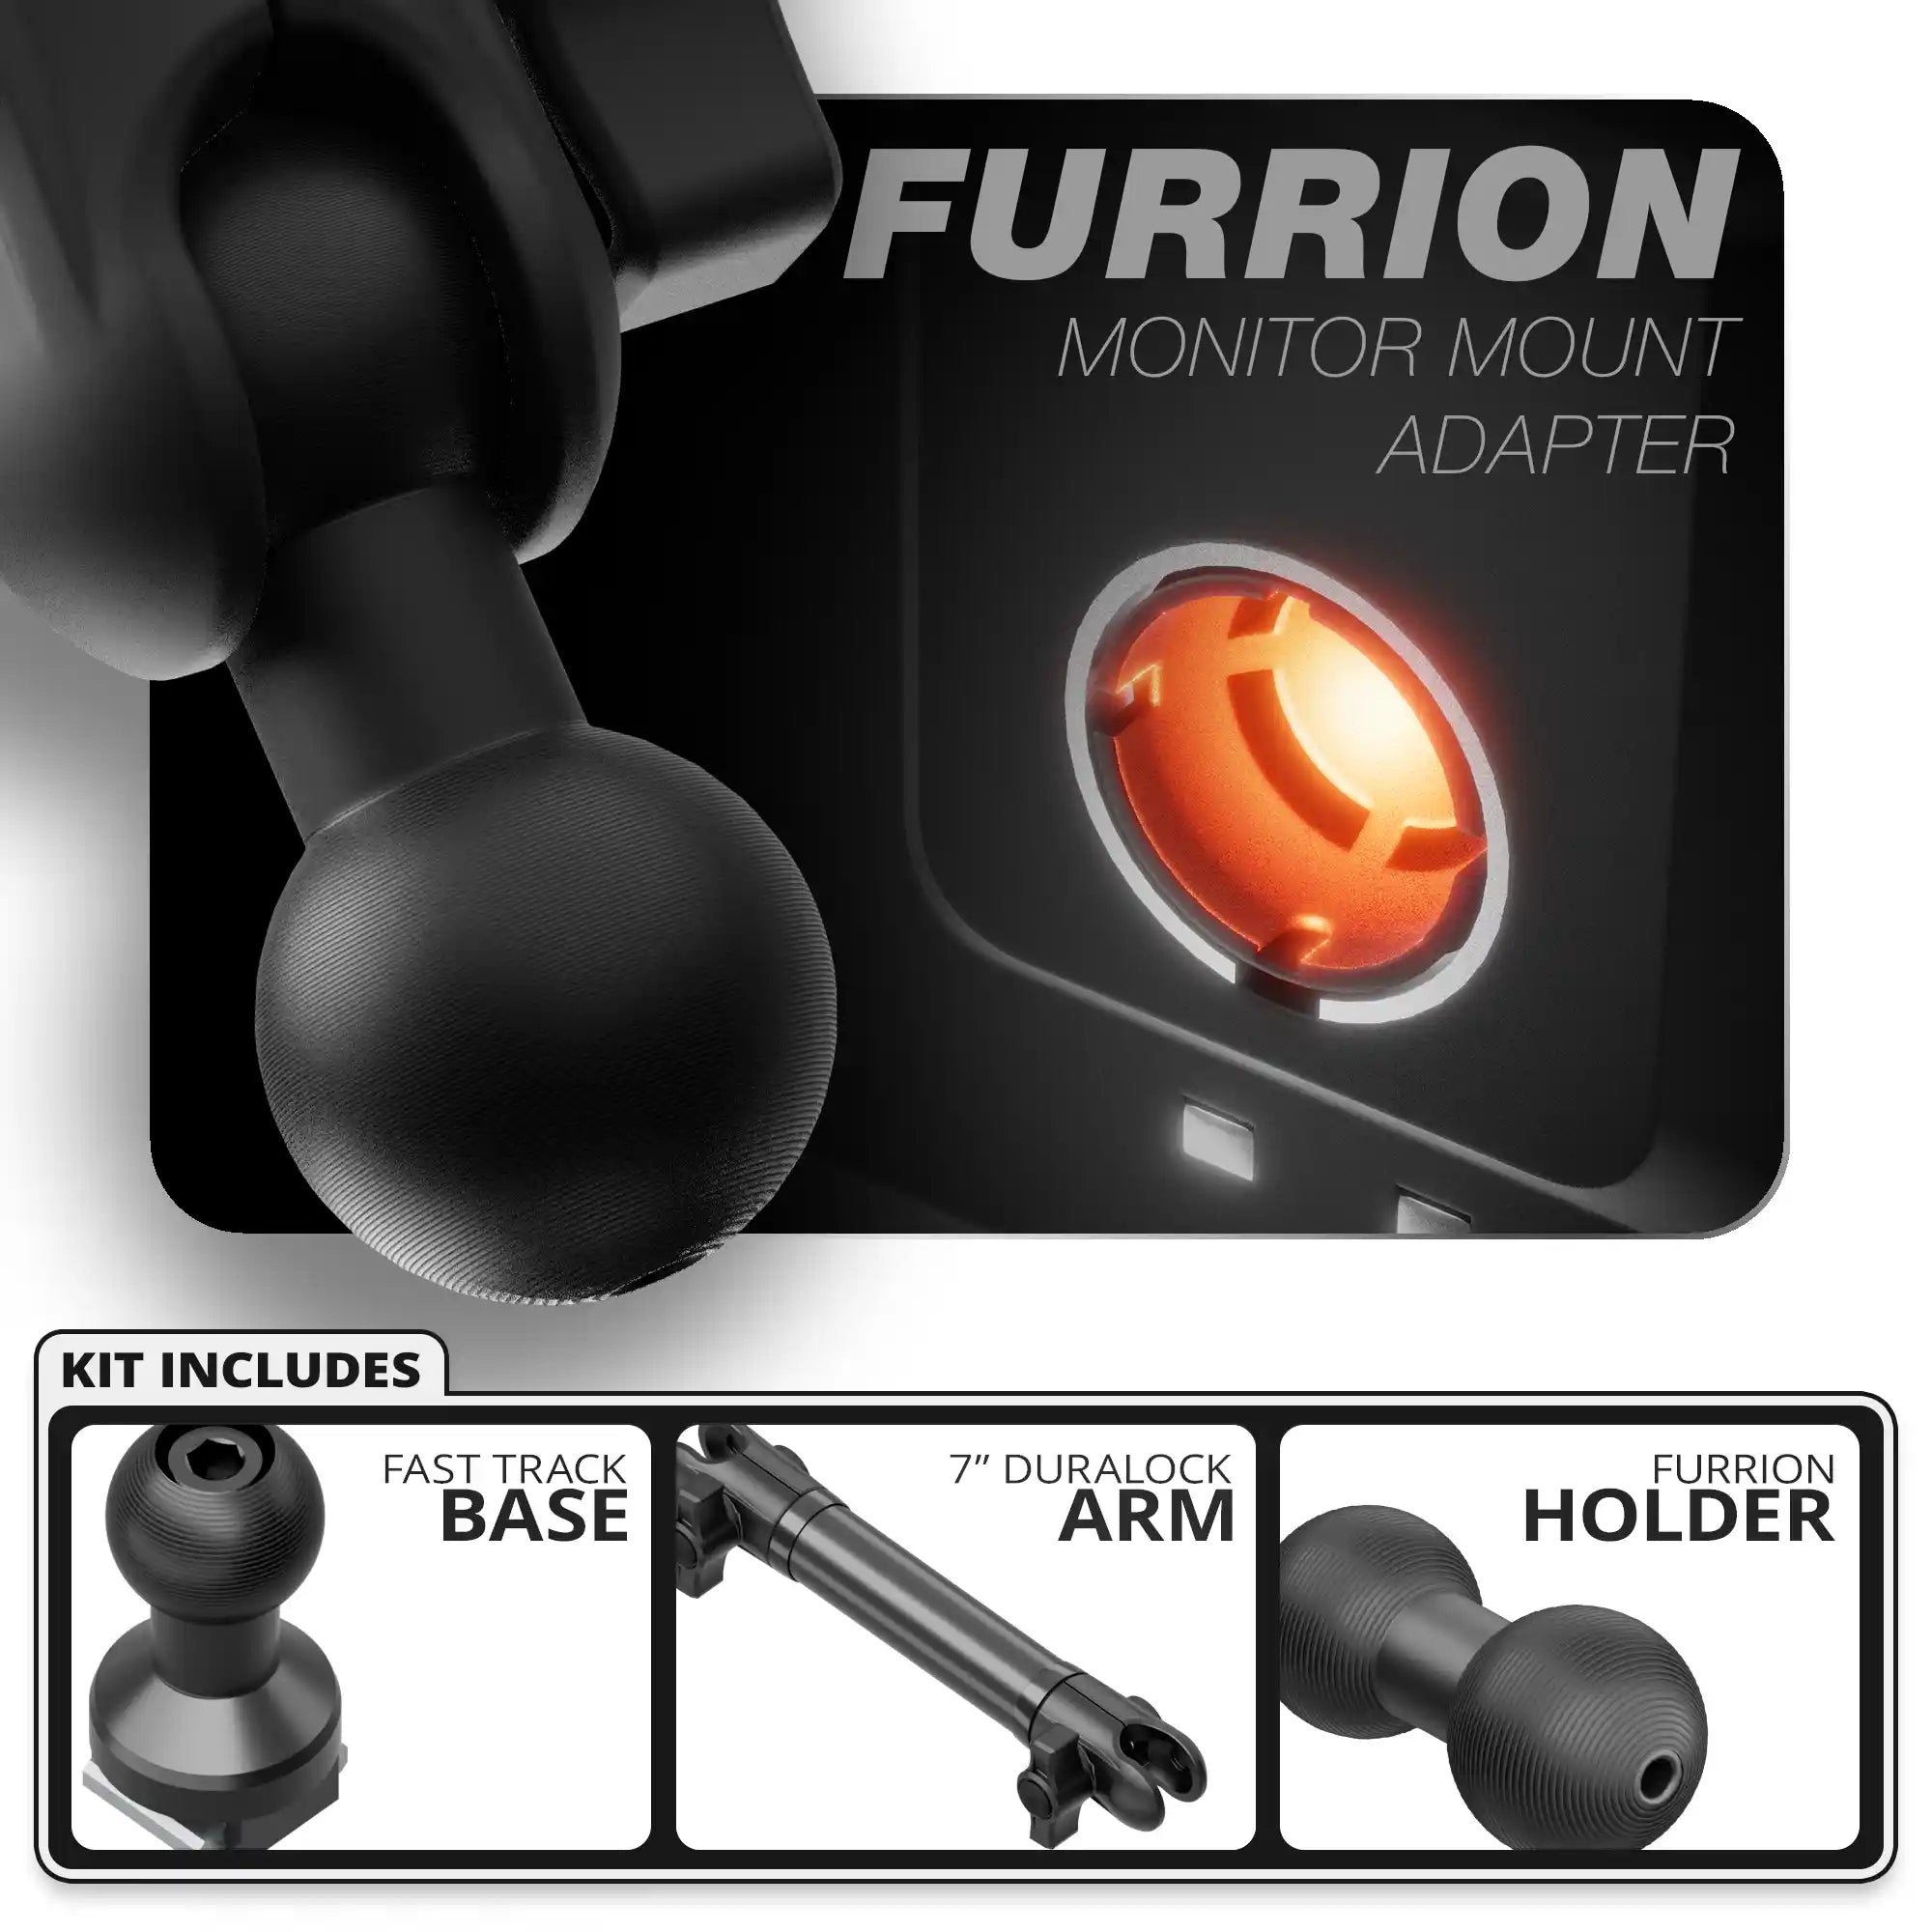 Furrion | Fast Track Base | 7" DuraLock Arm